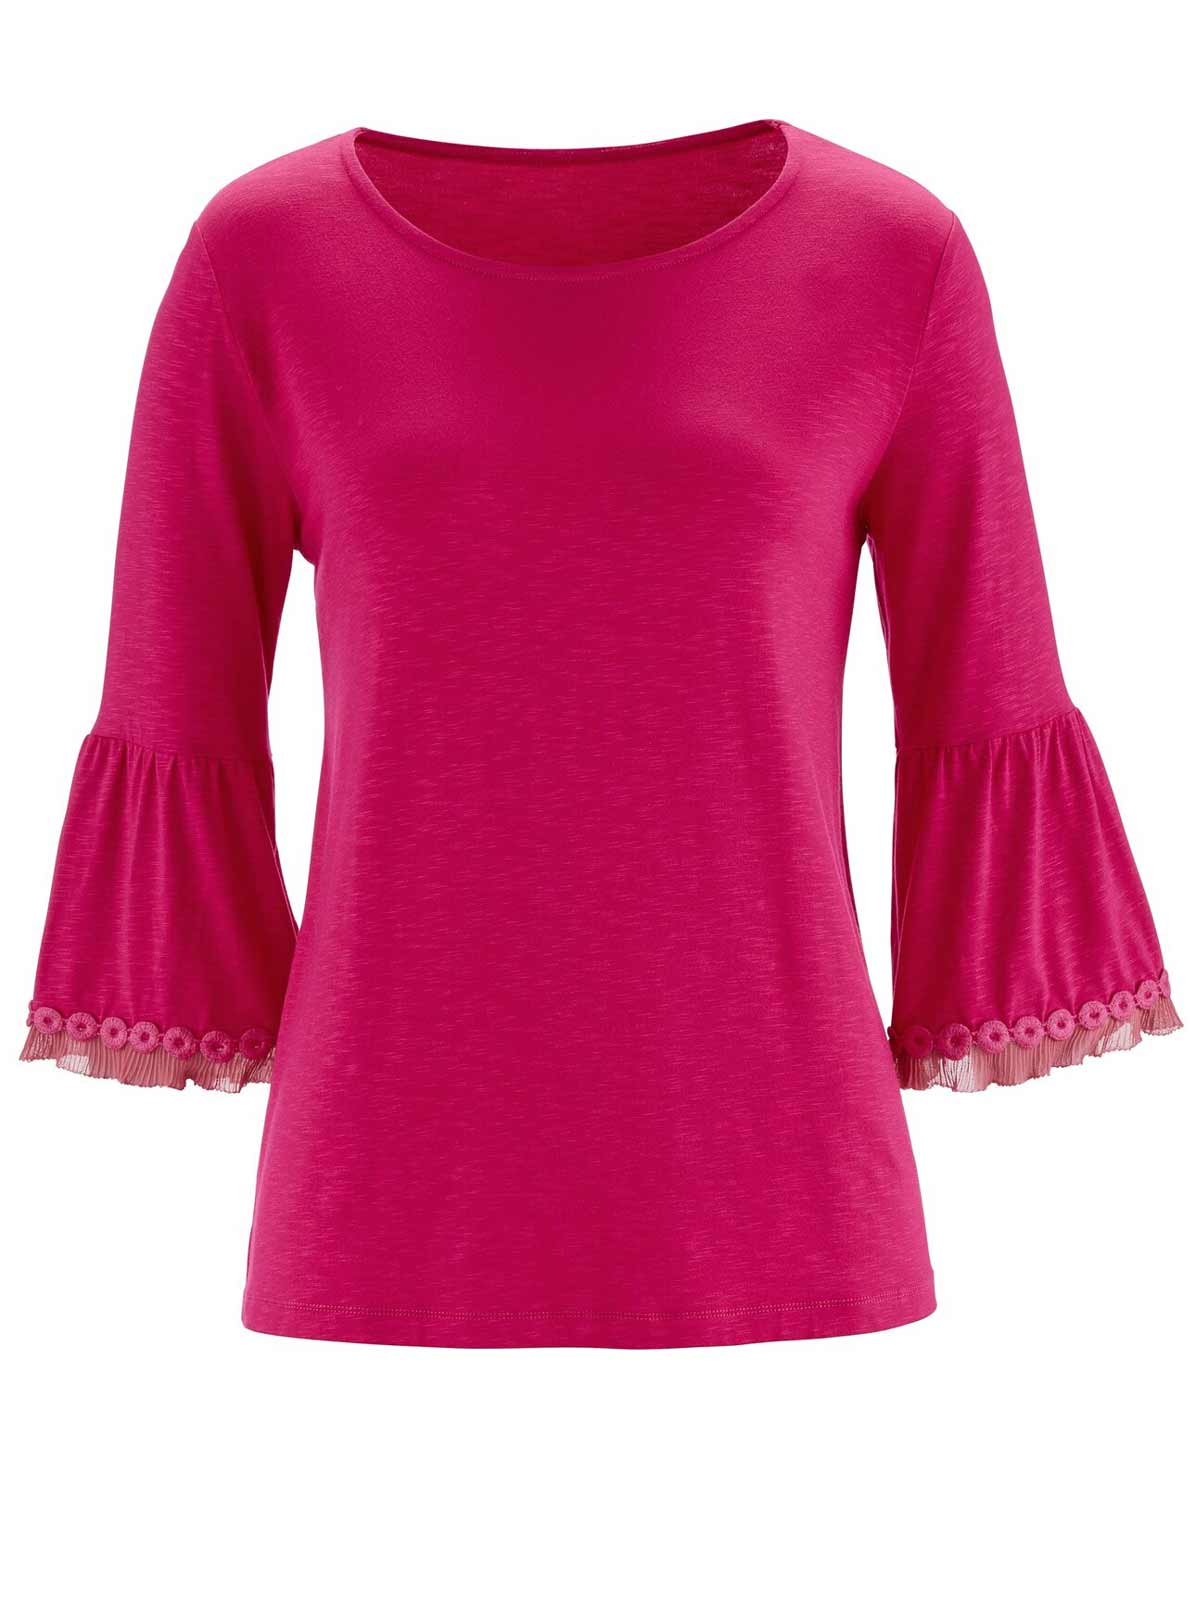 CRéATION L Damen Jerseyshirt mit Volants, pink